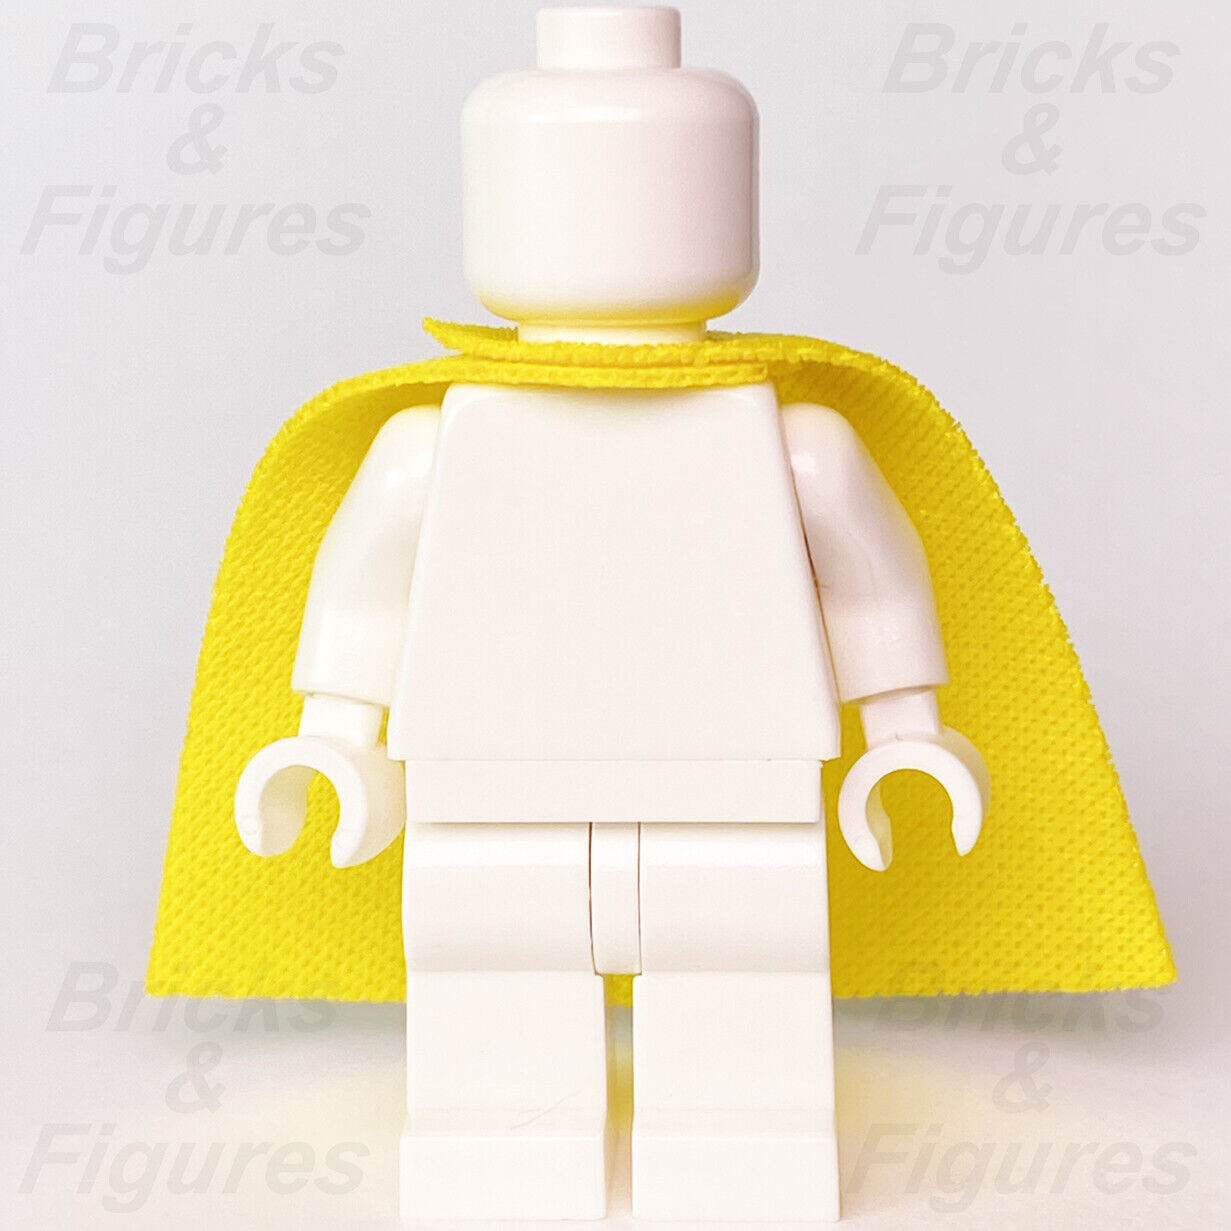 DC Super Heroes LEGO Yellow Spongy Cape Robe Cloth Minifigure Part 19888 76035